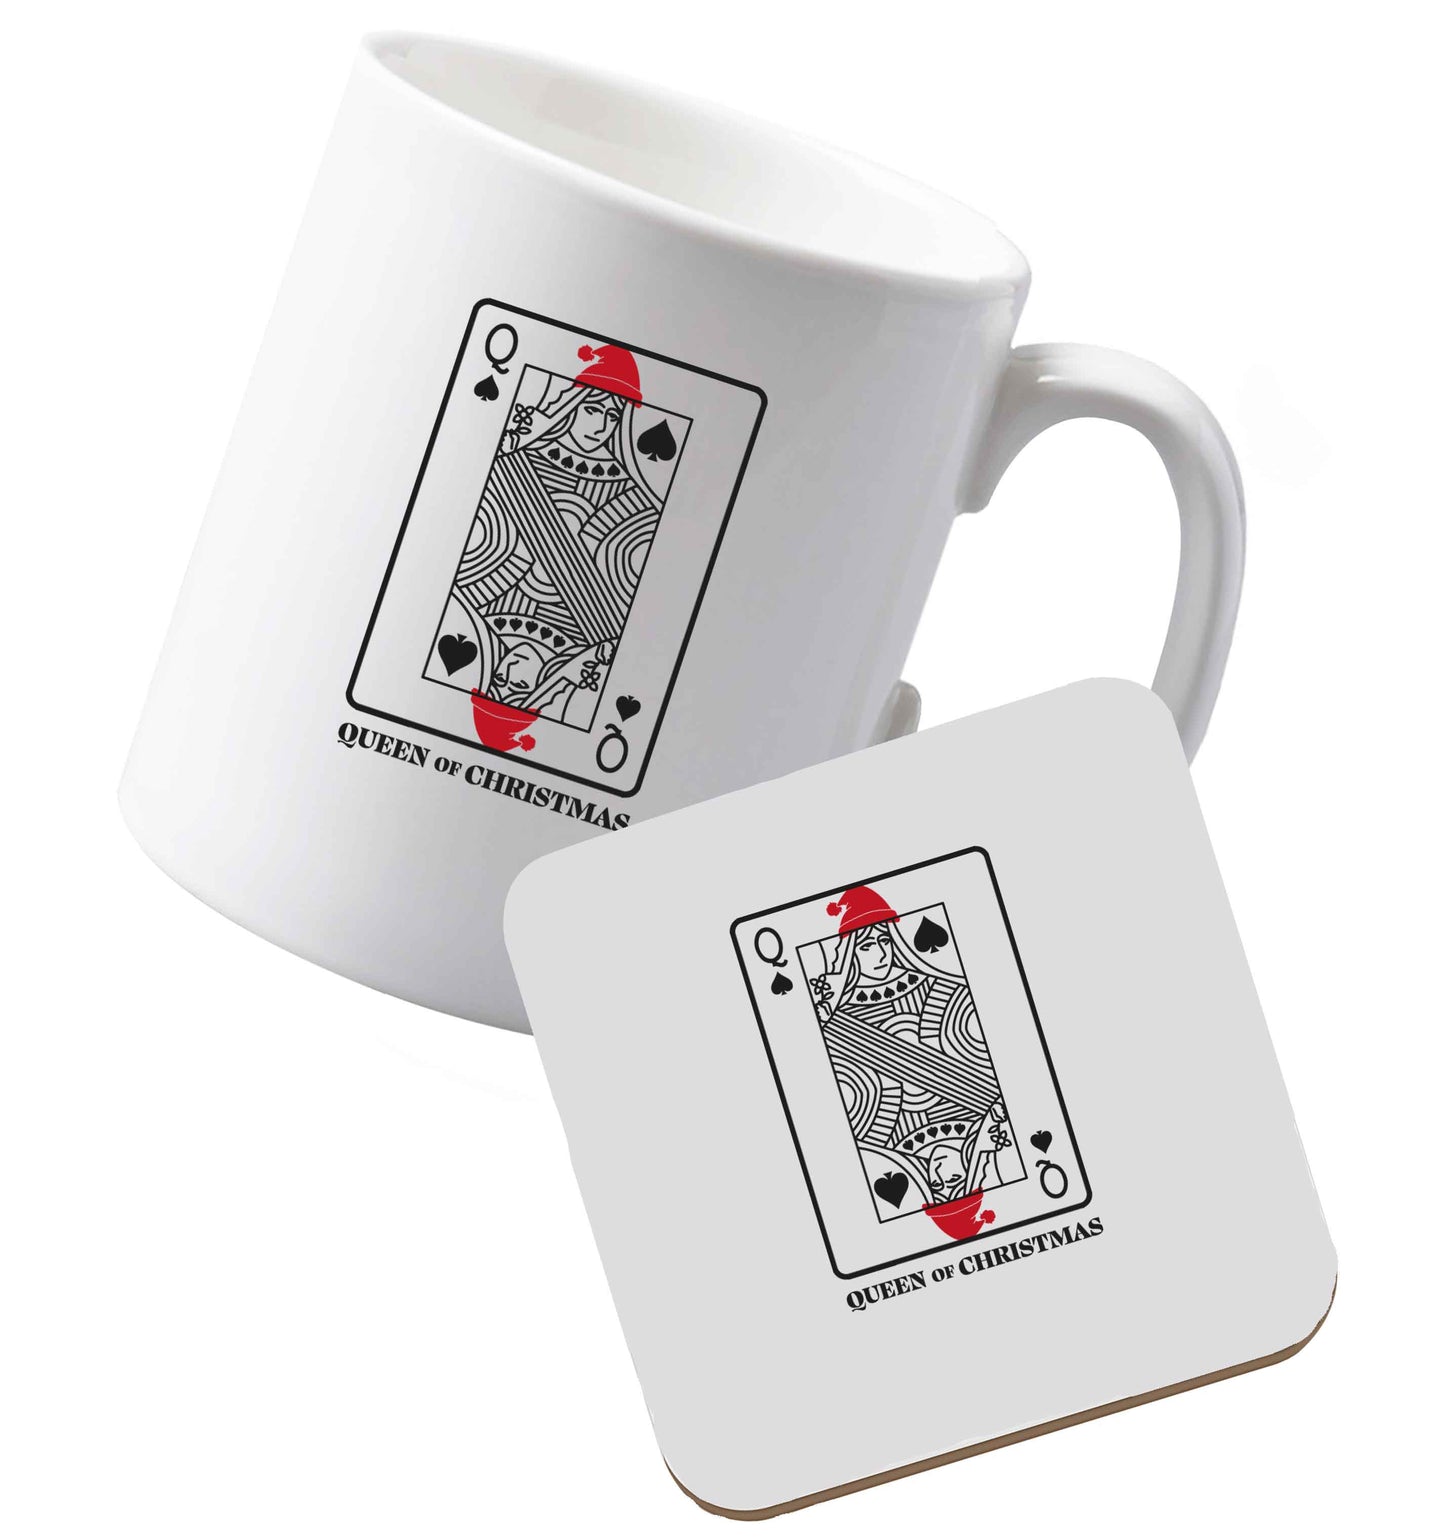 10 oz Ceramic mug and coaster Queen of christmas both sides